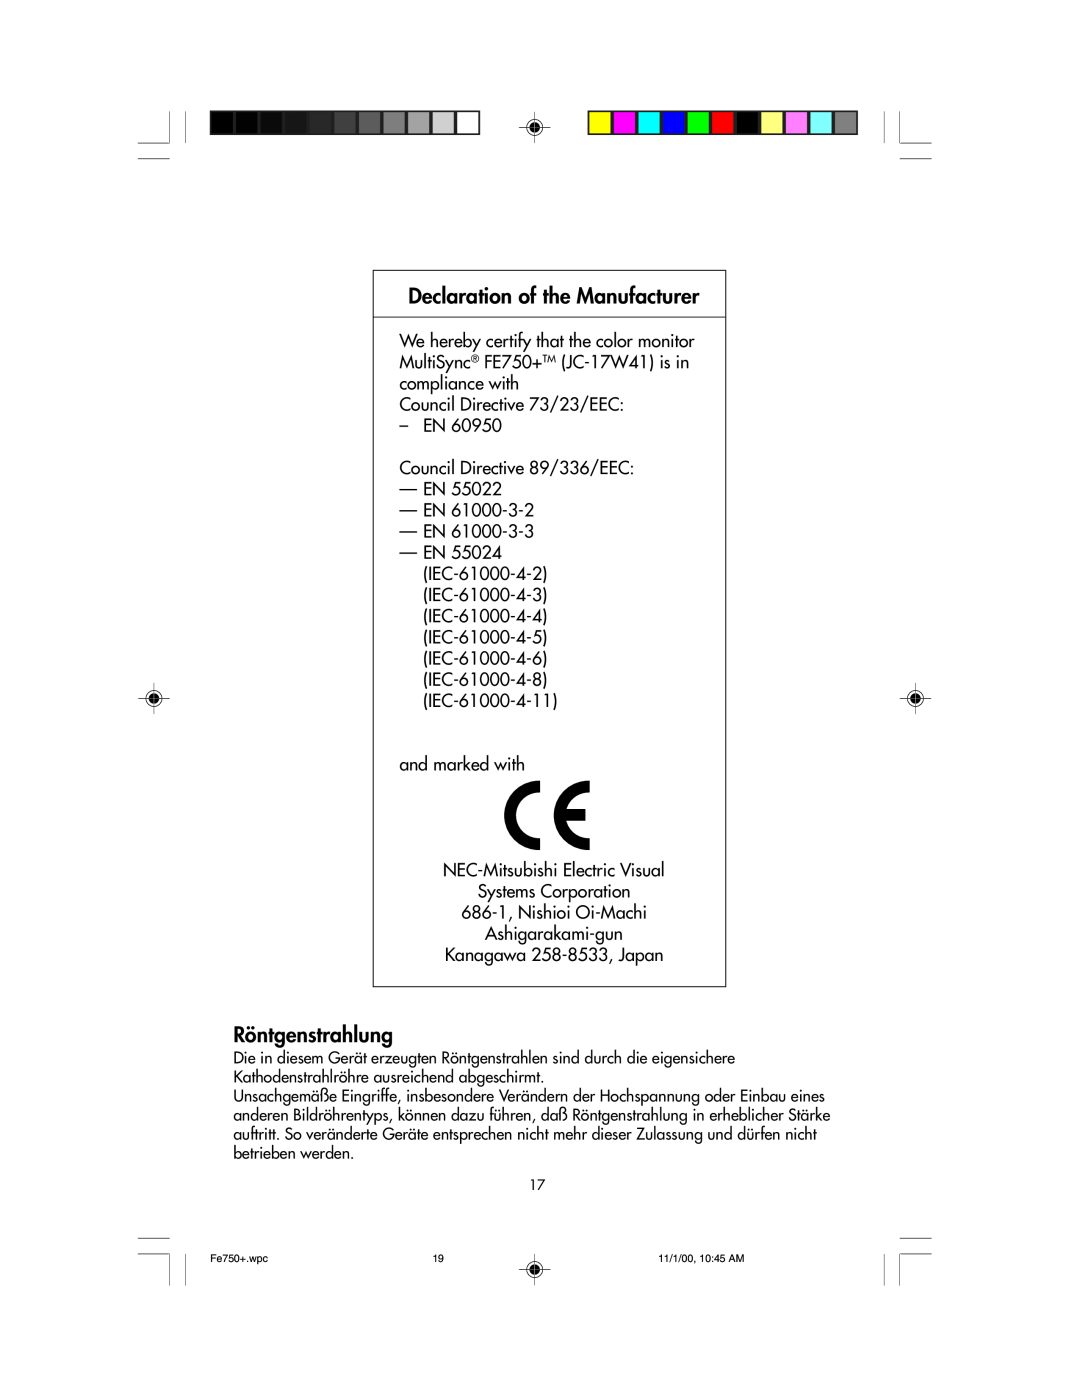 NEC FE750 Plus user manual Declaration of the Manufacturer, Röntgenstrahlung 